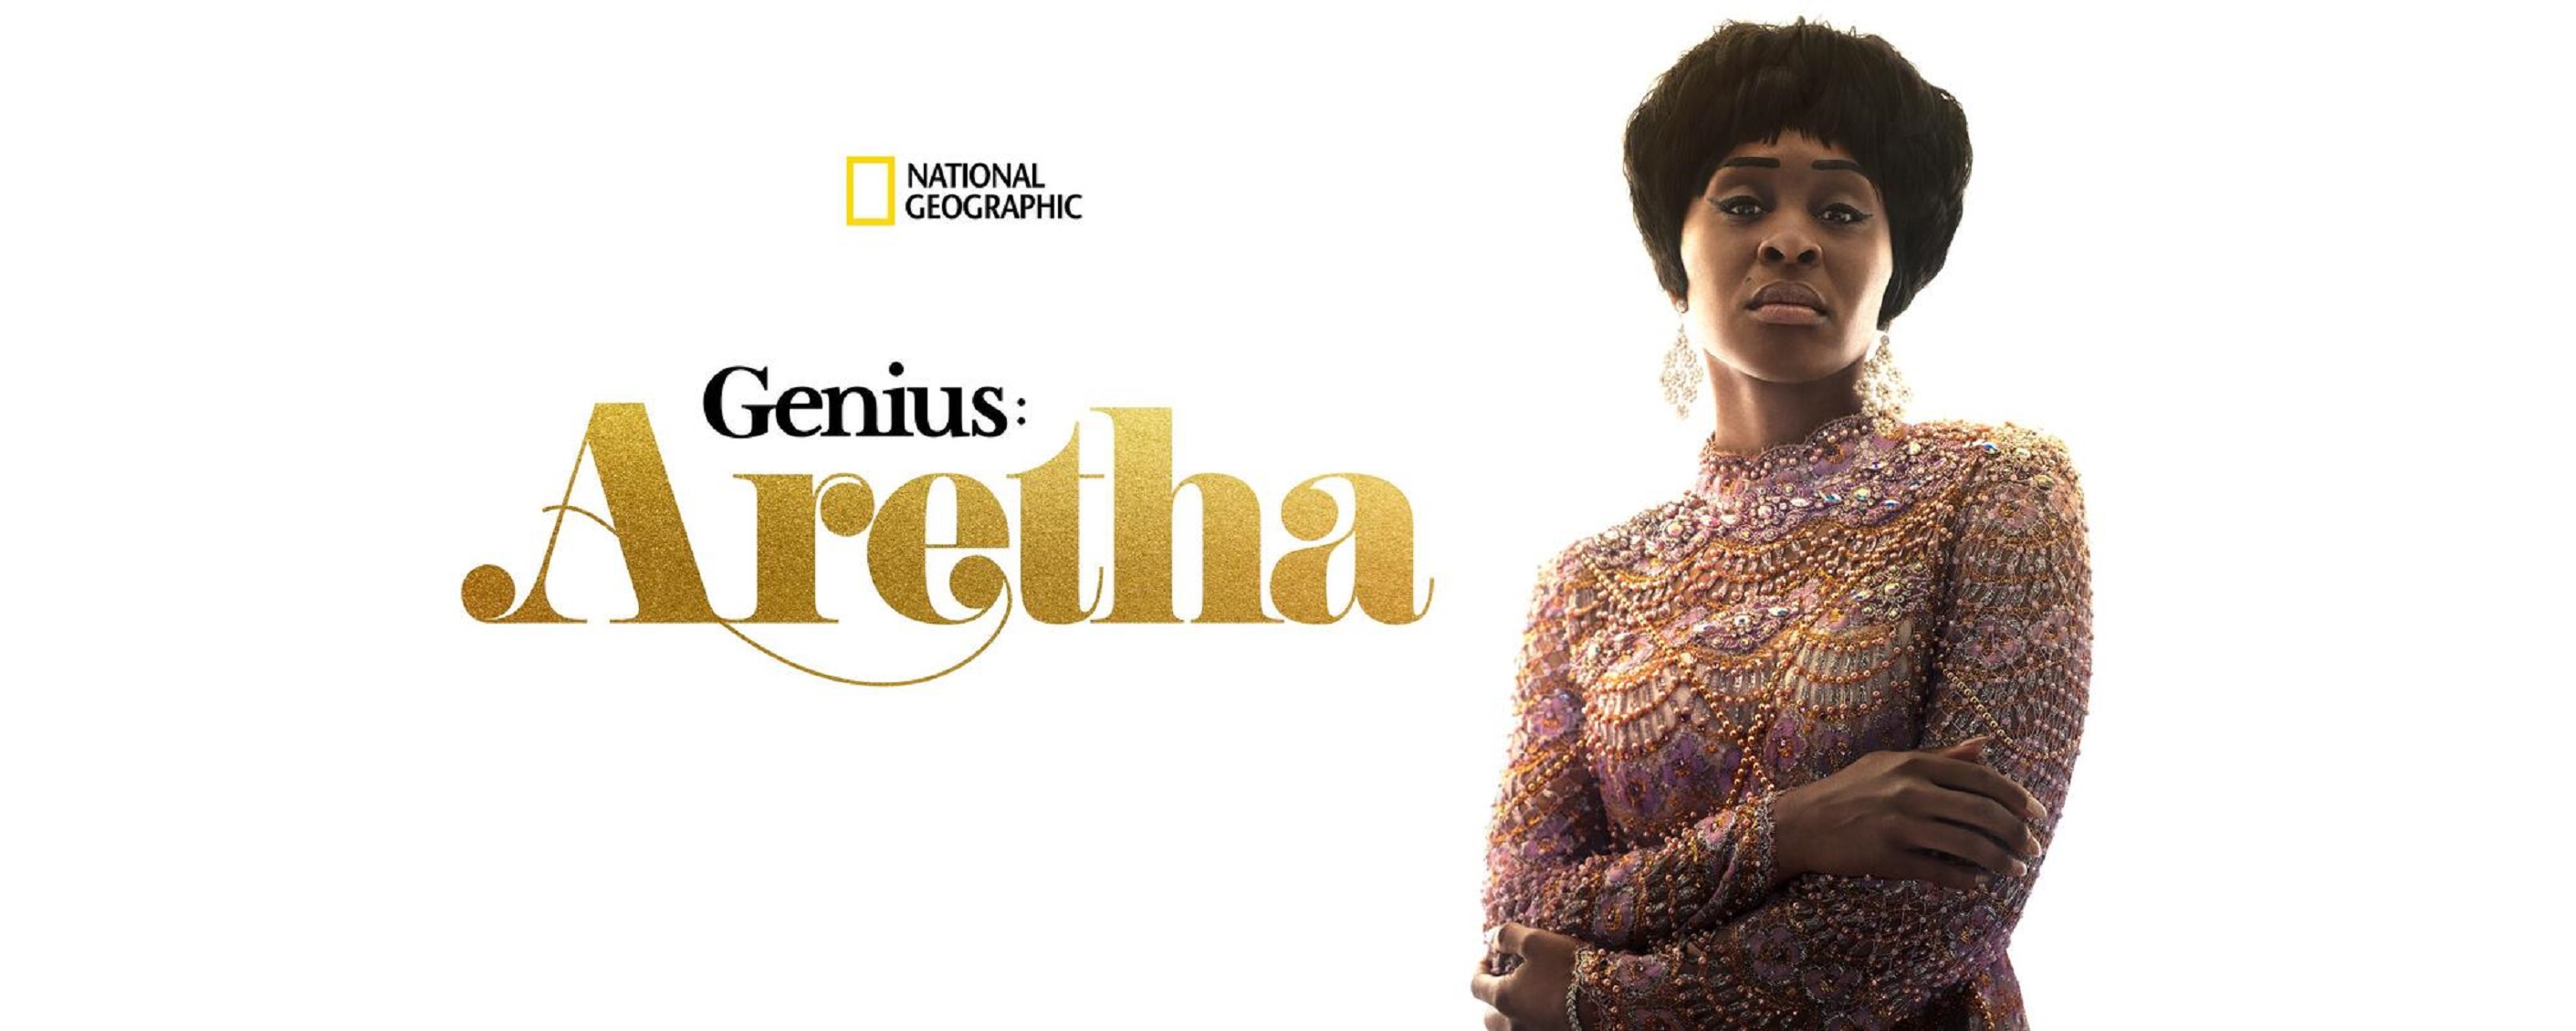 “Genius: Aretha” - National Geographic's Premier